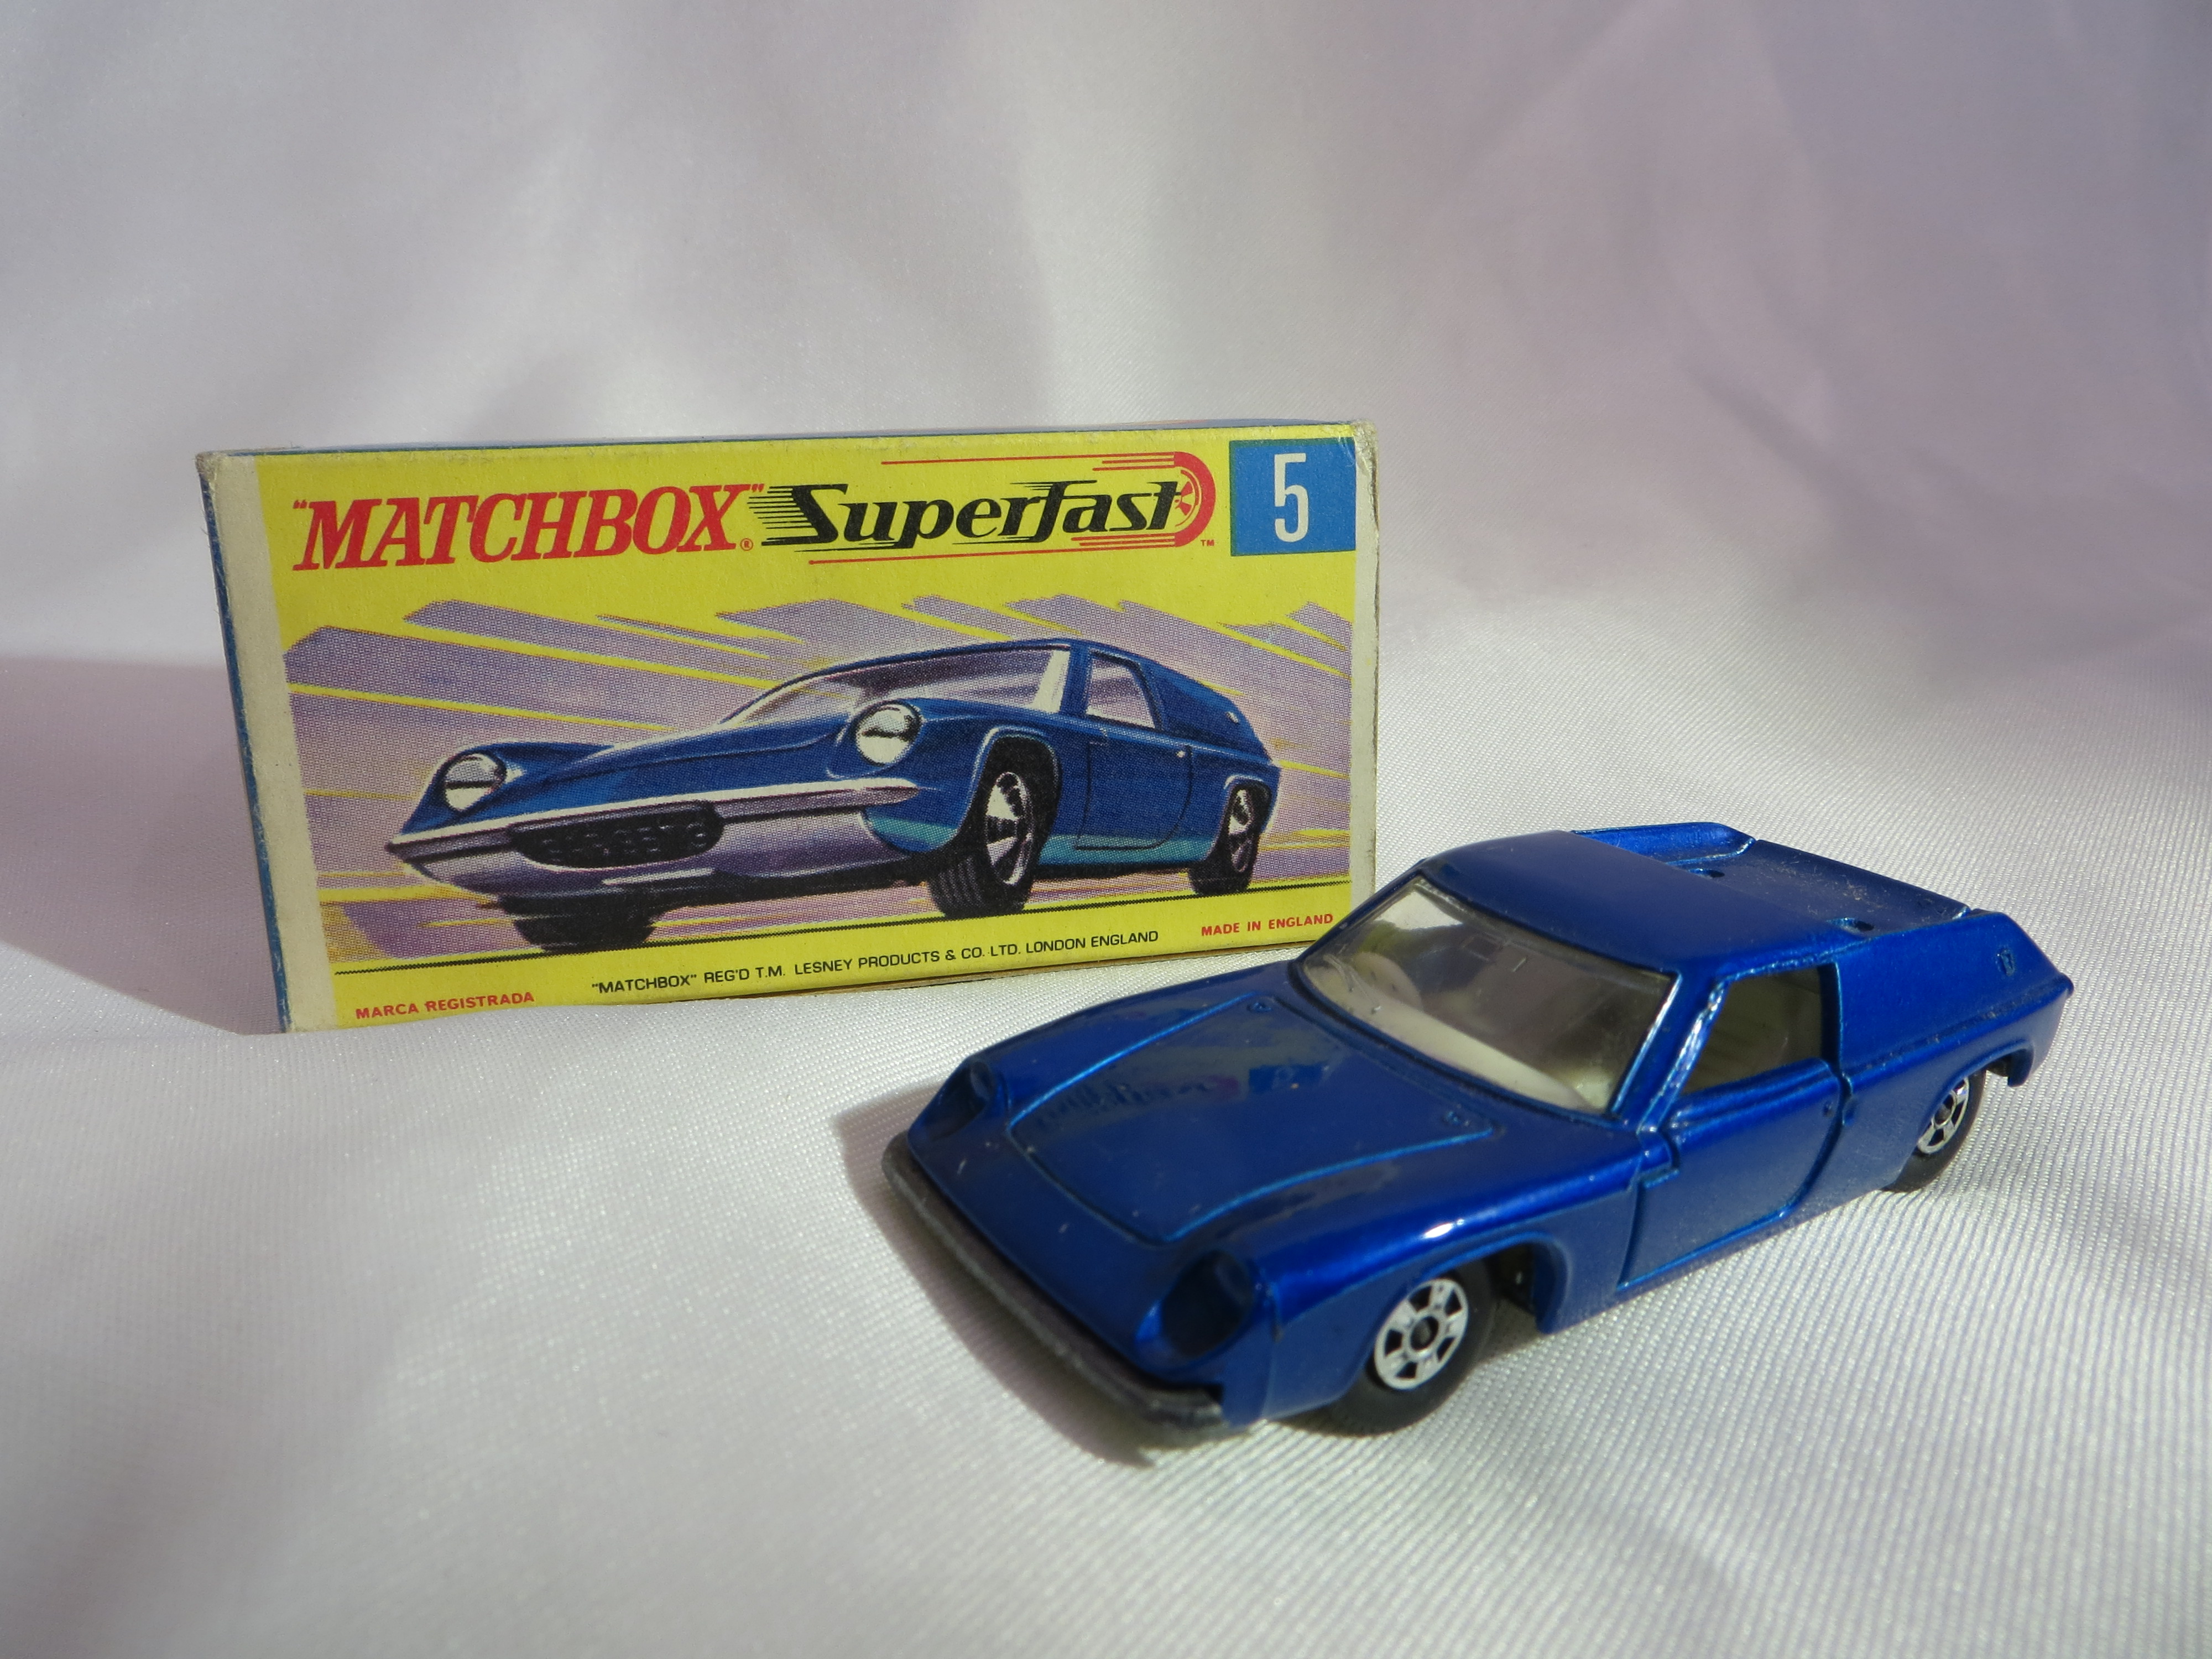 A Matchbox Superfast Lotus Europa; No. 5. Original box.